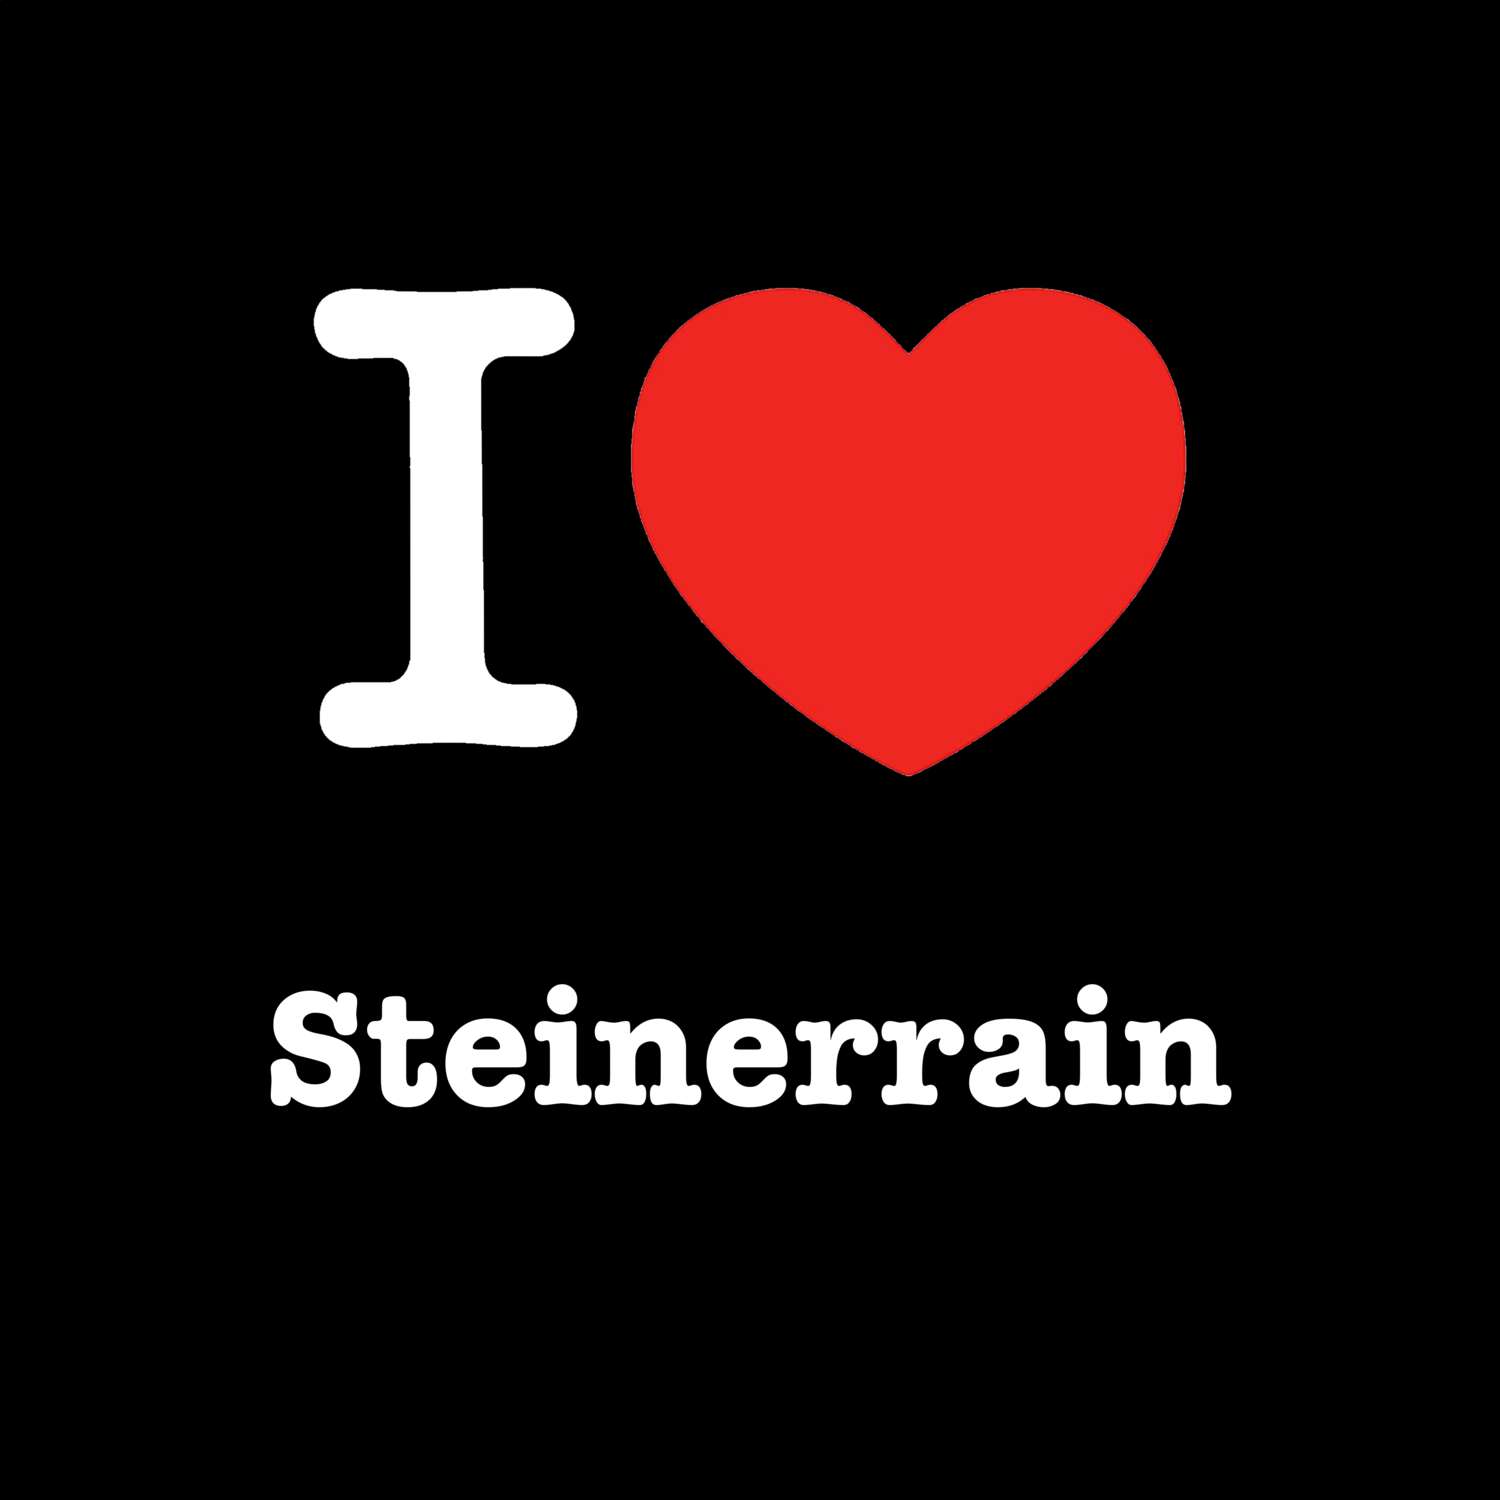 Steinerrain T-Shirt »I love«